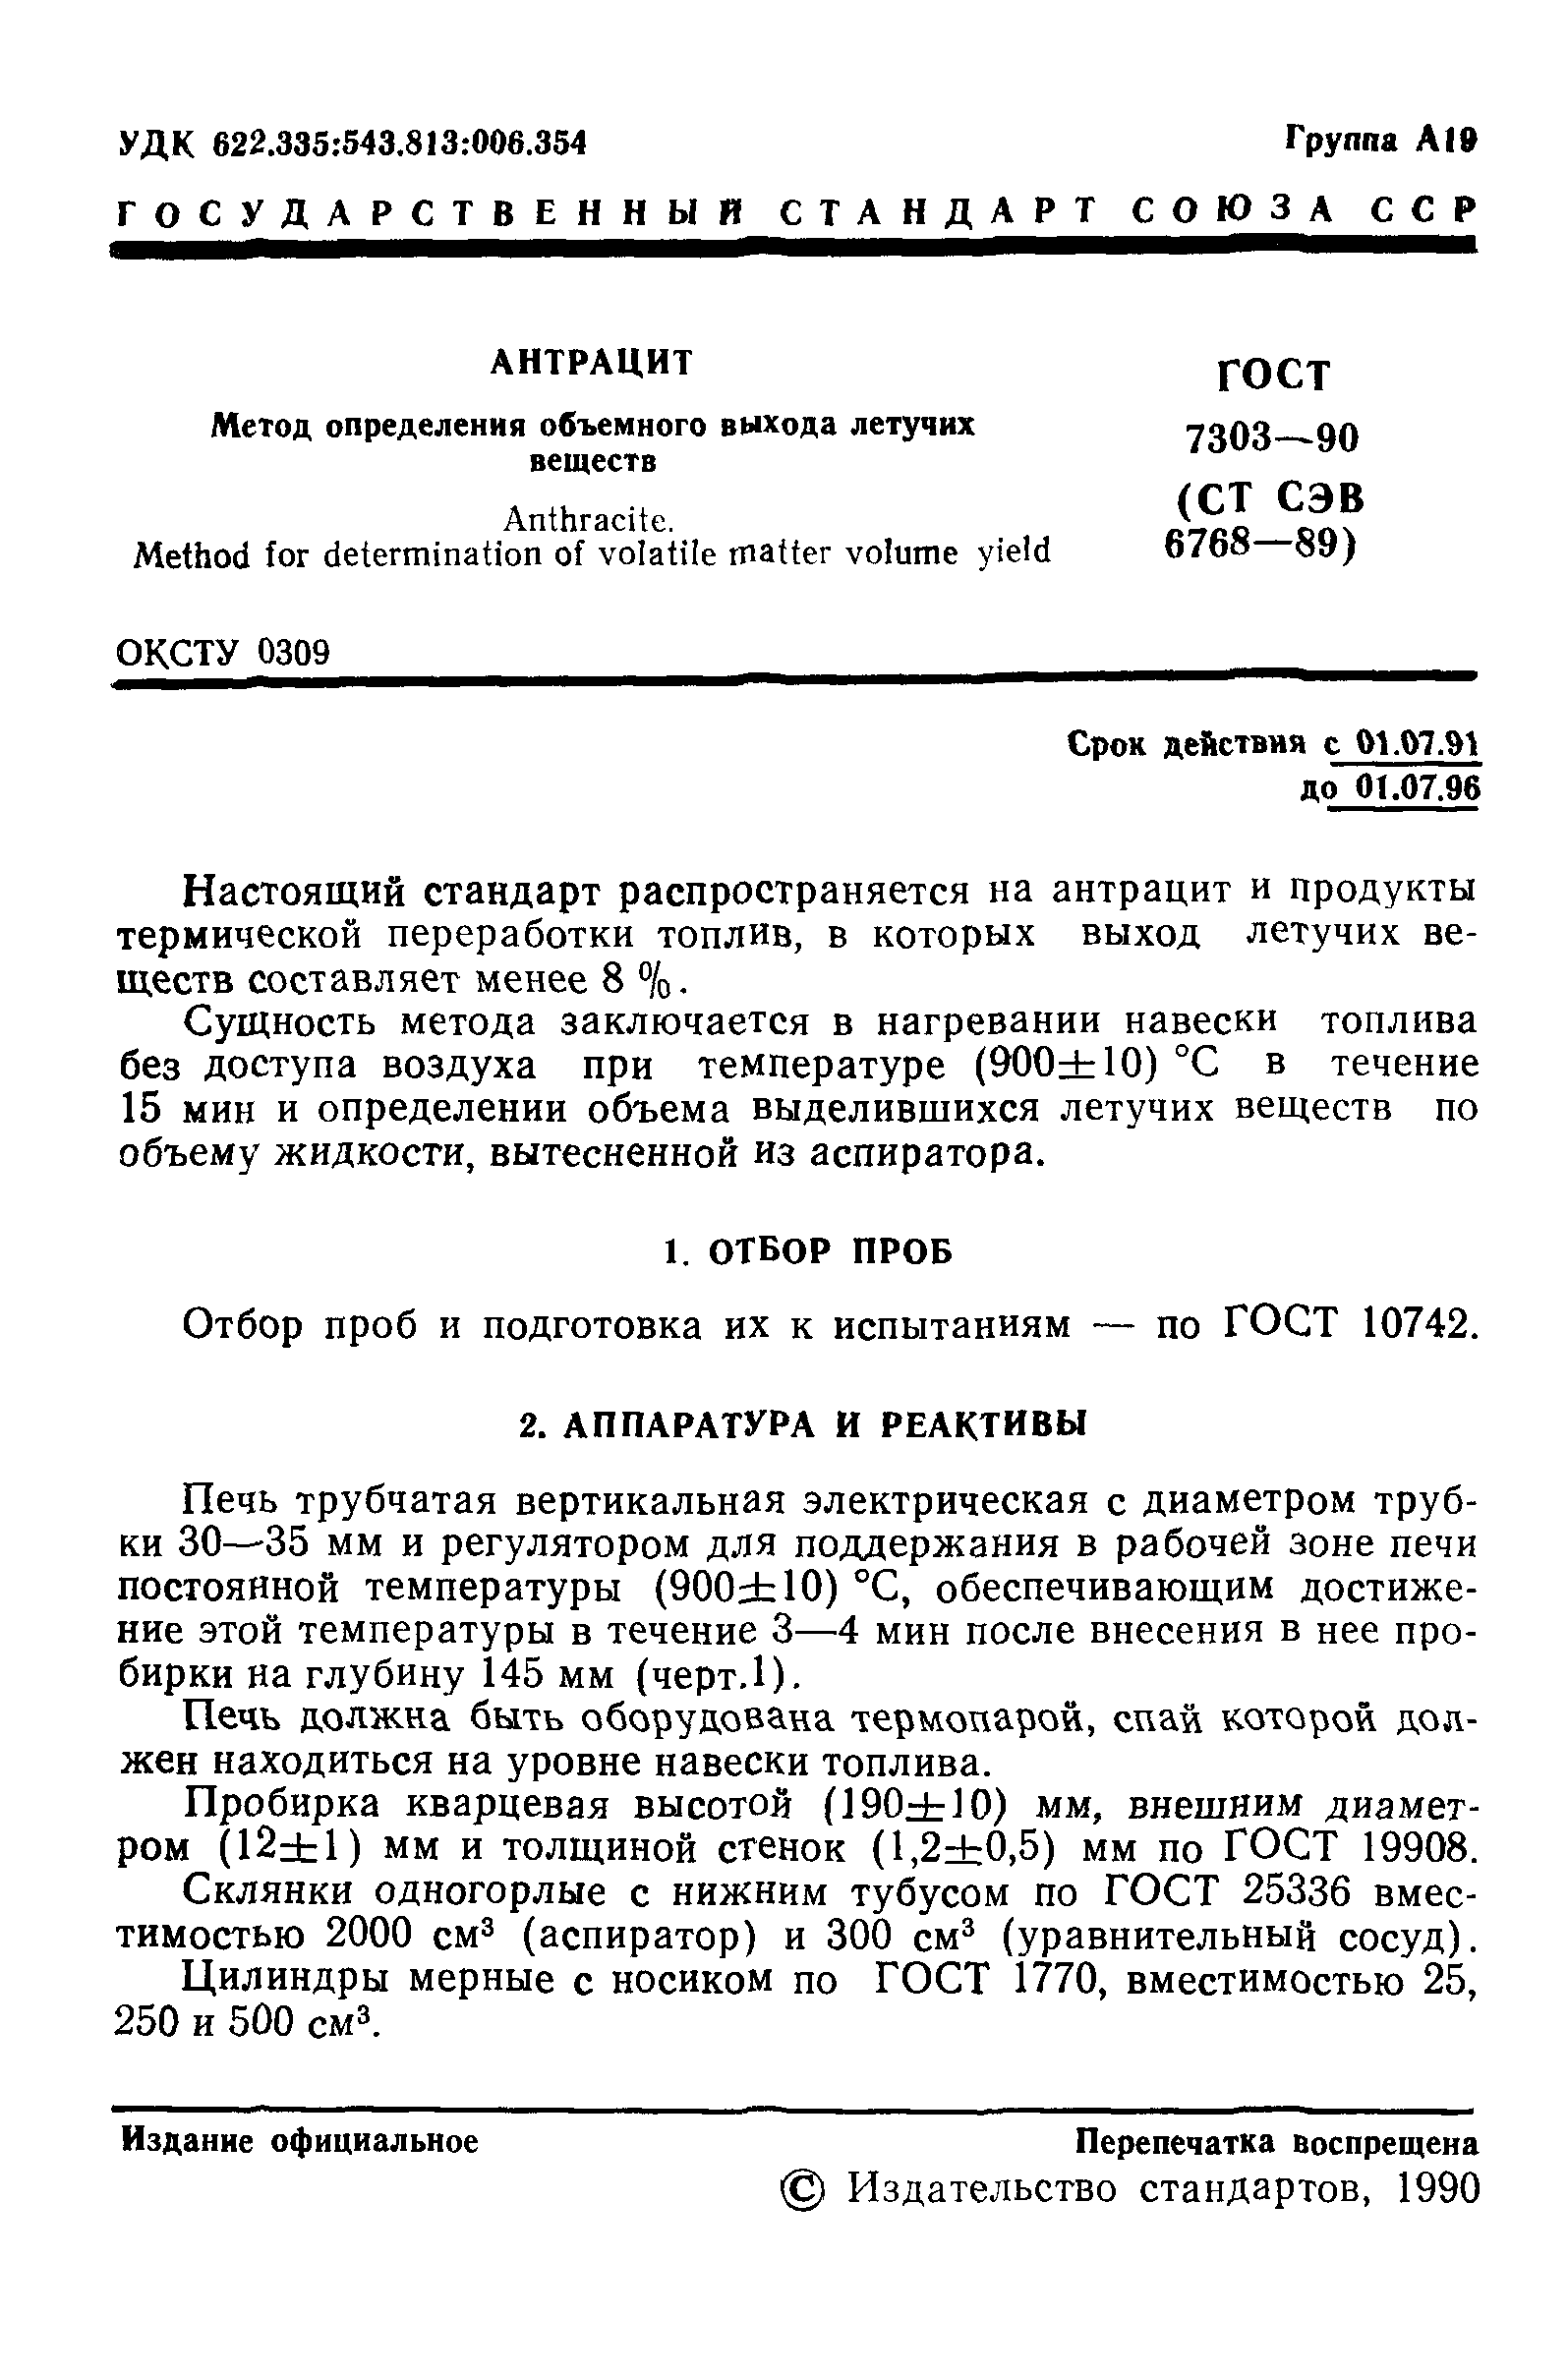 ГОСТ 7303-90